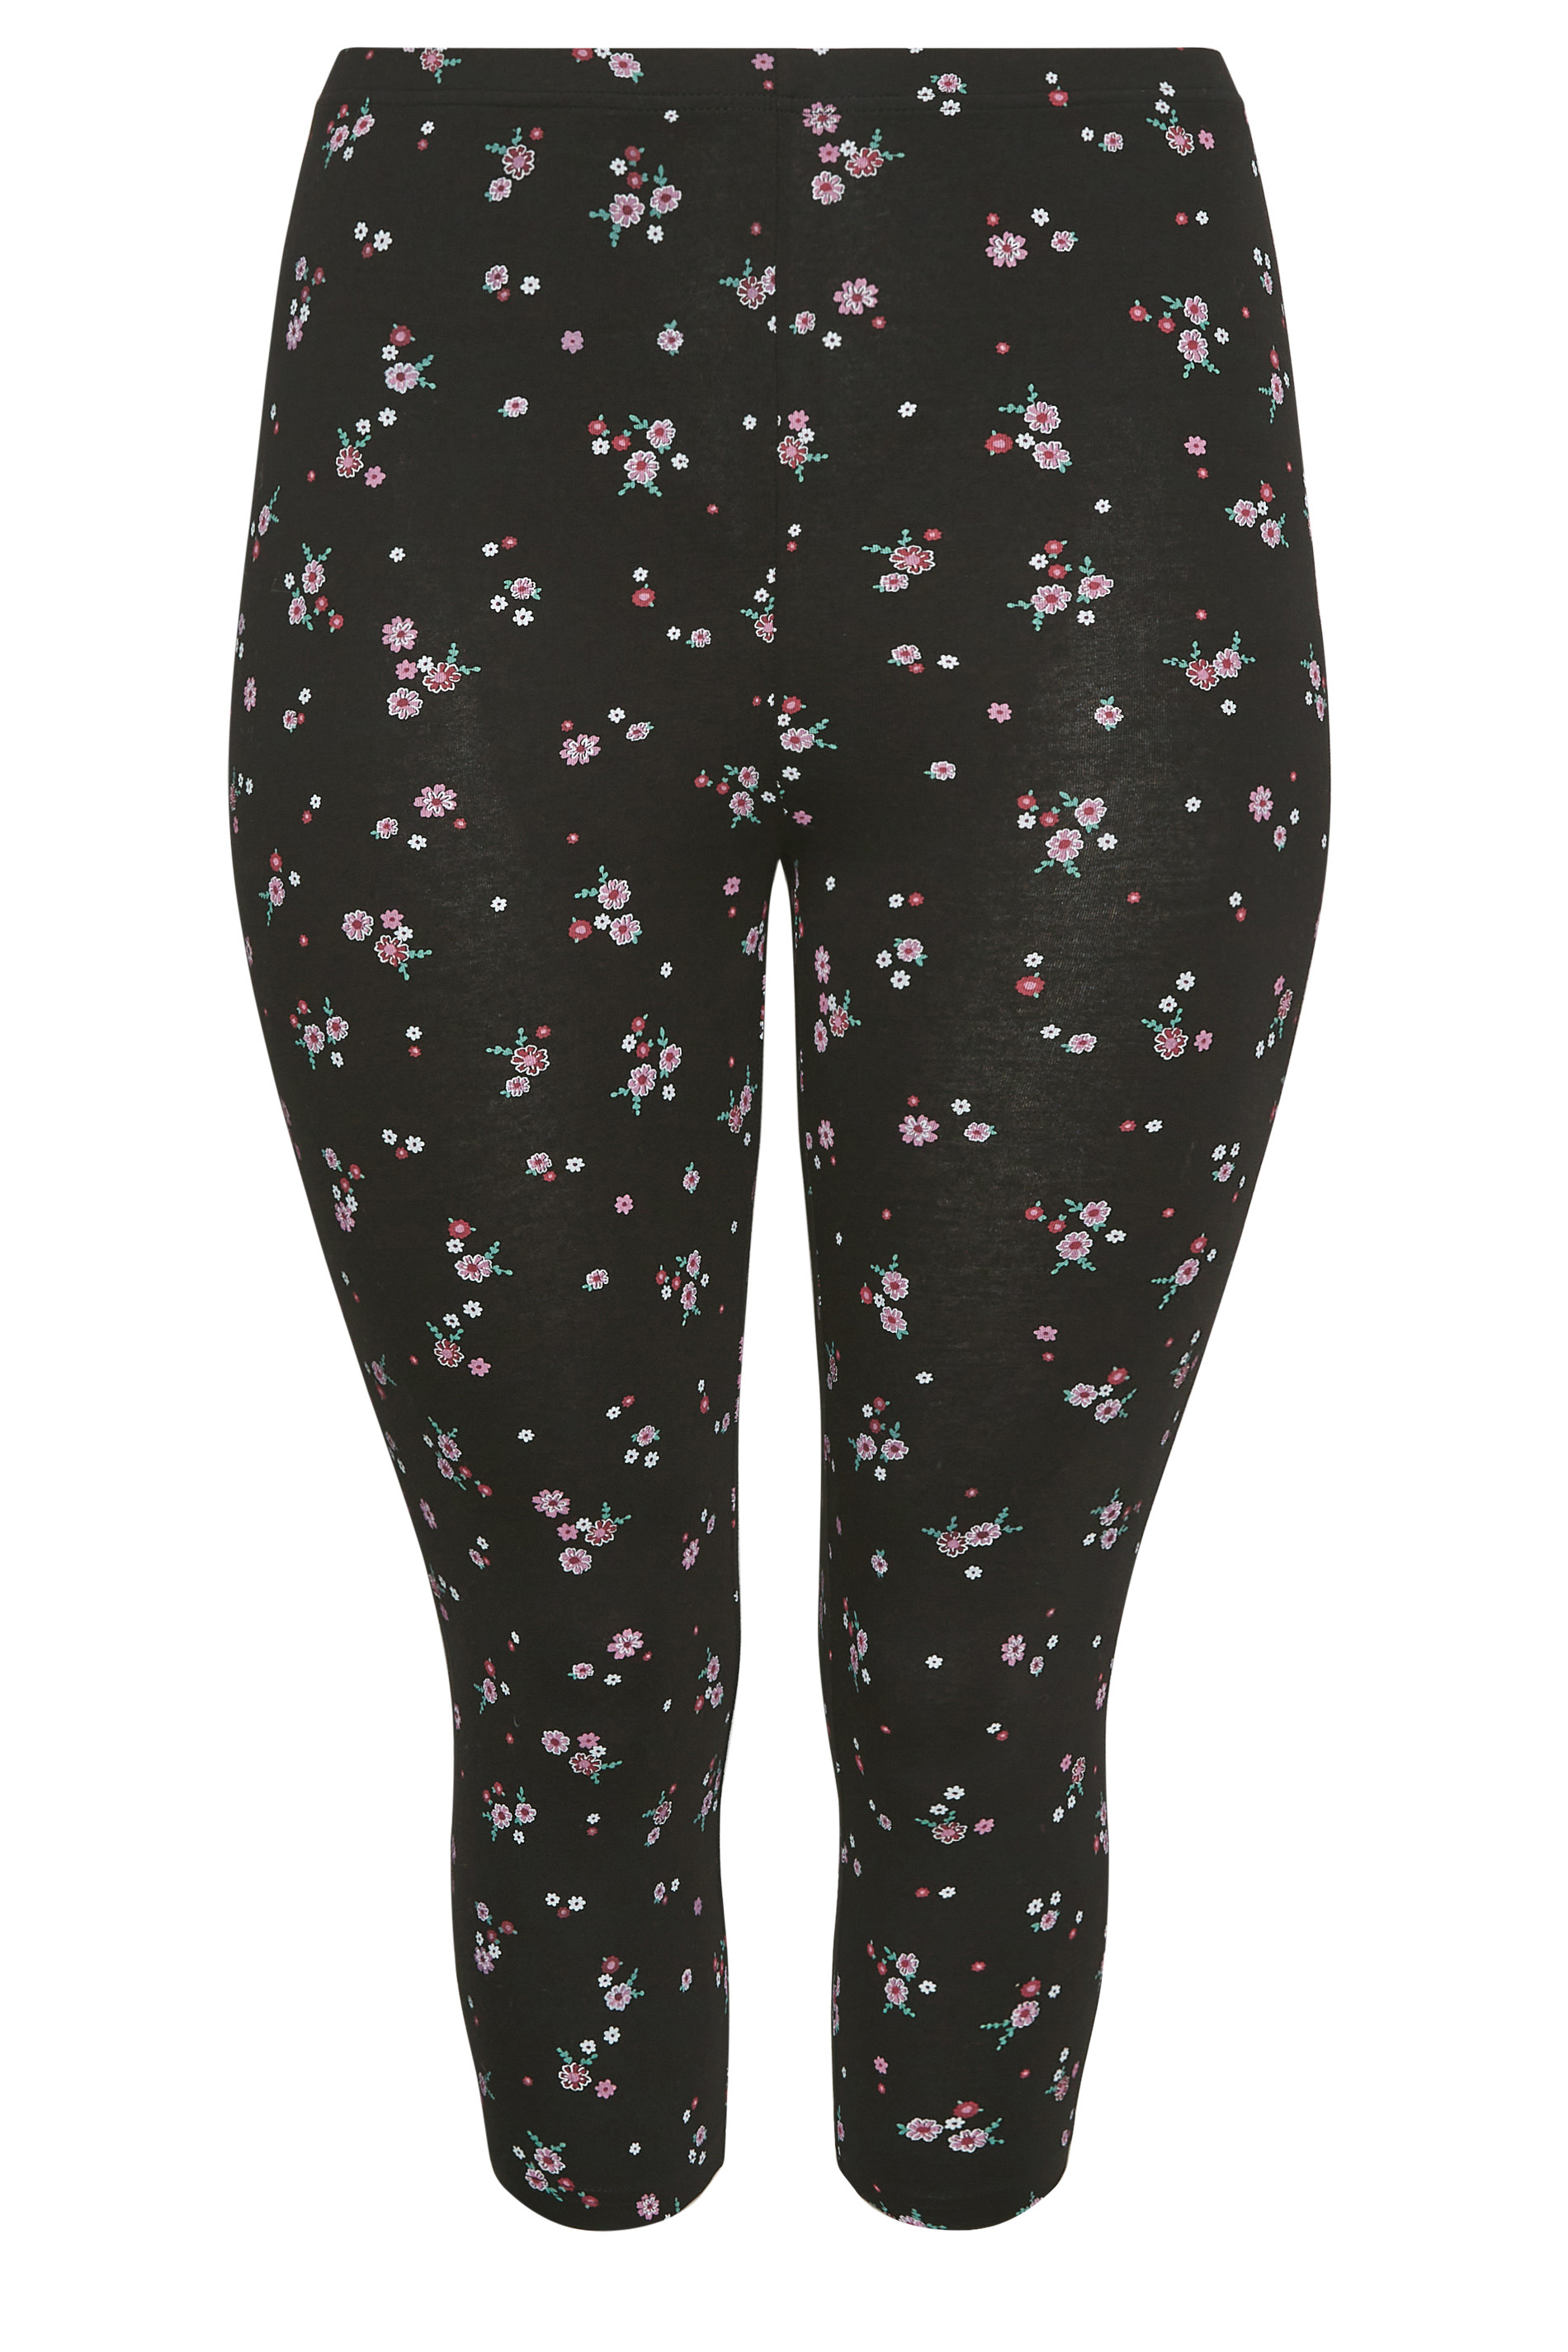 Fit Girl Kloset — Black floral print leggings (one size)